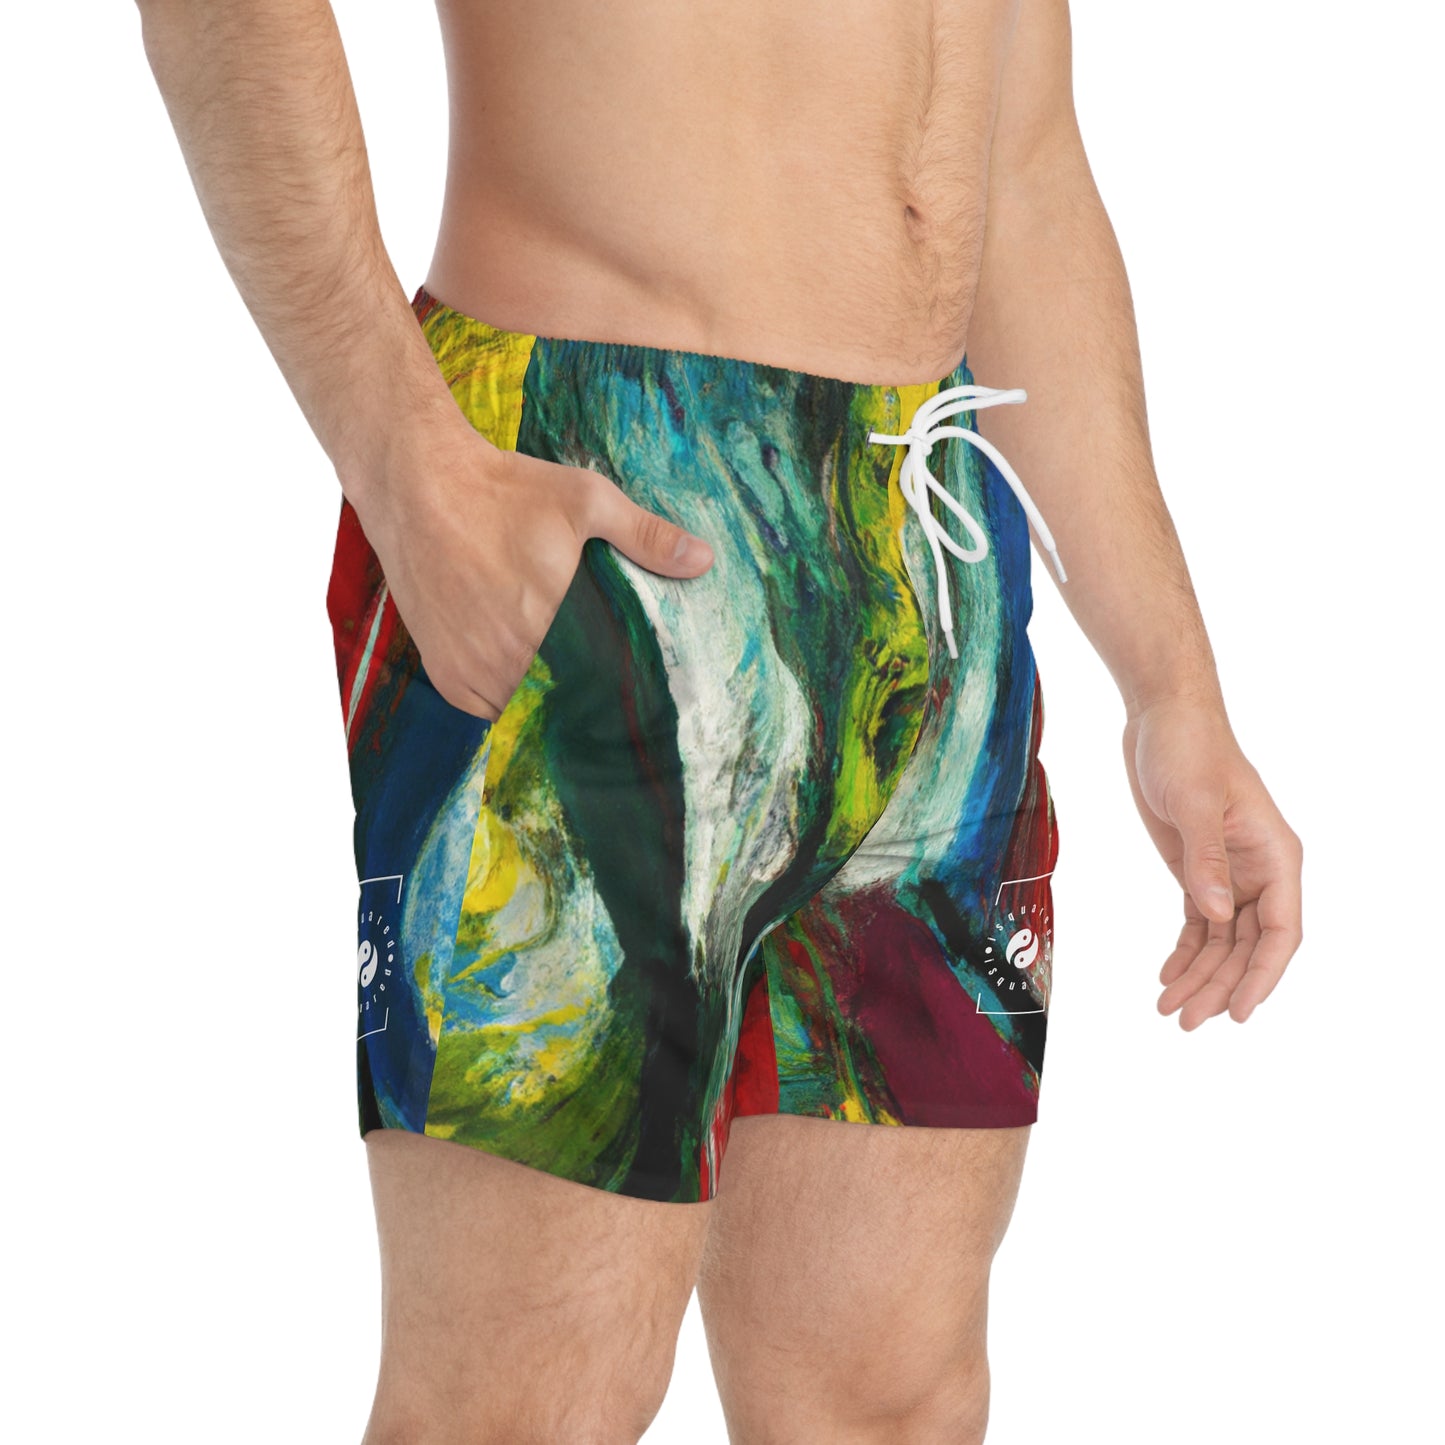 Olympian Impression - Swim Trunks for Men